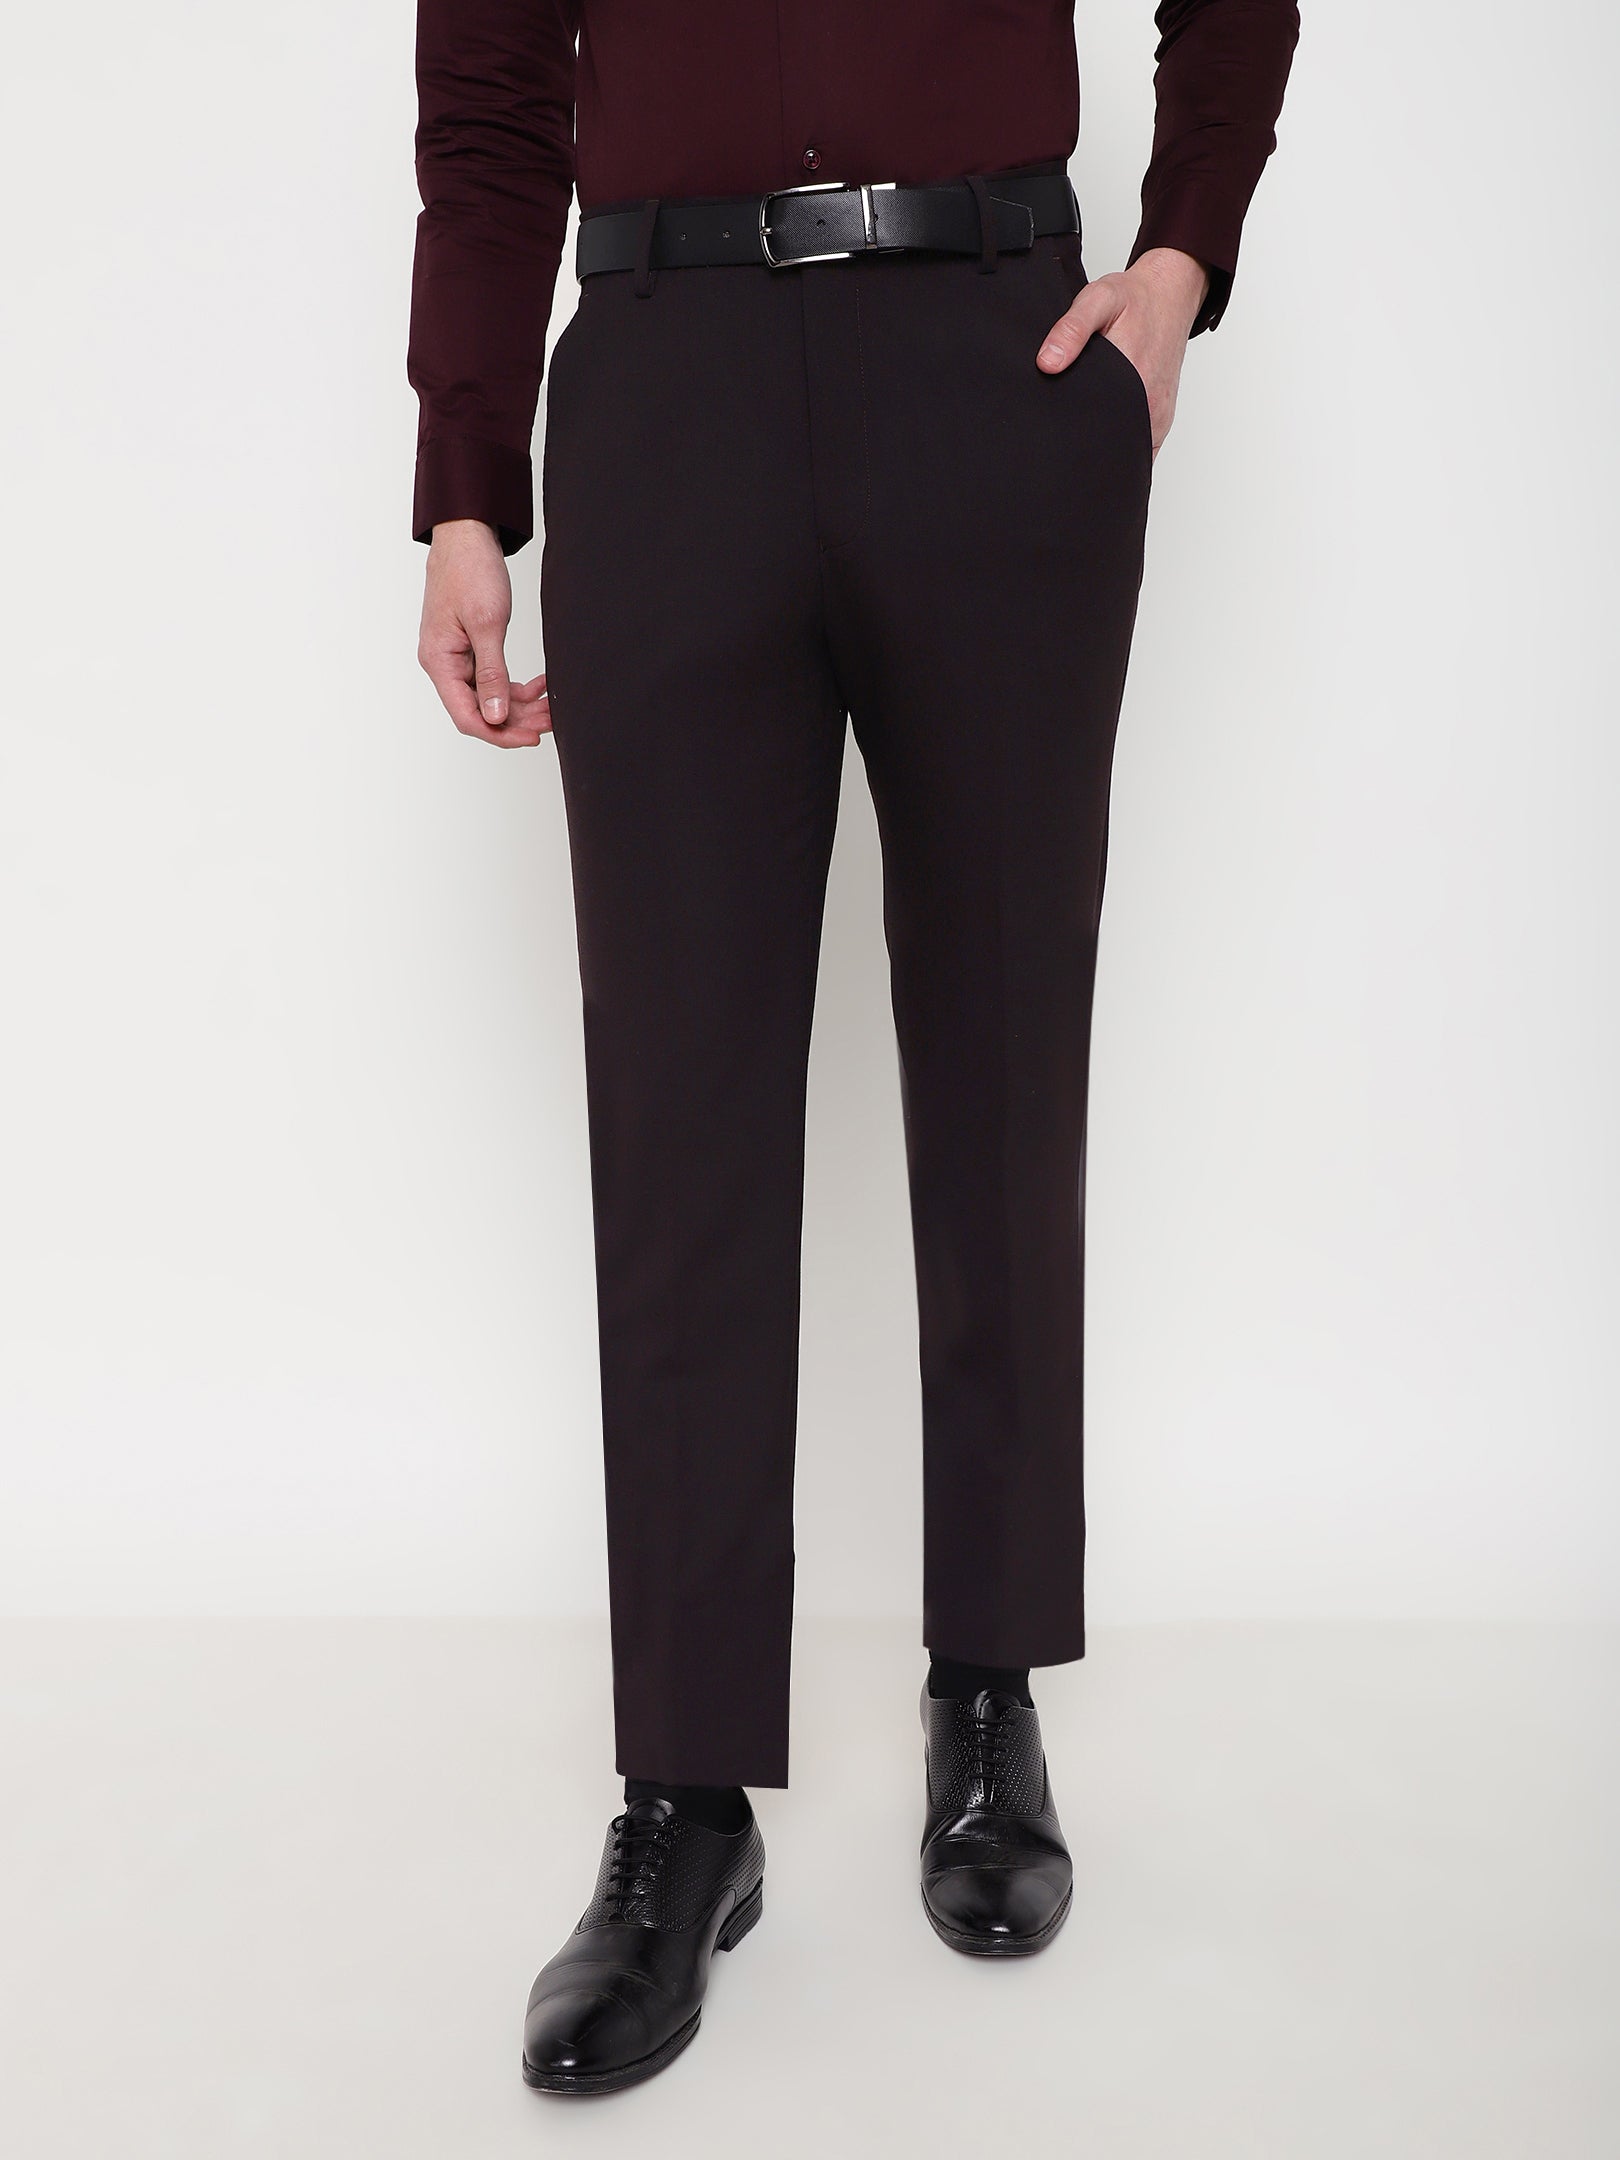 Buy Inspire Premium Black Slim Fit Trouser (28) at Amazon.in